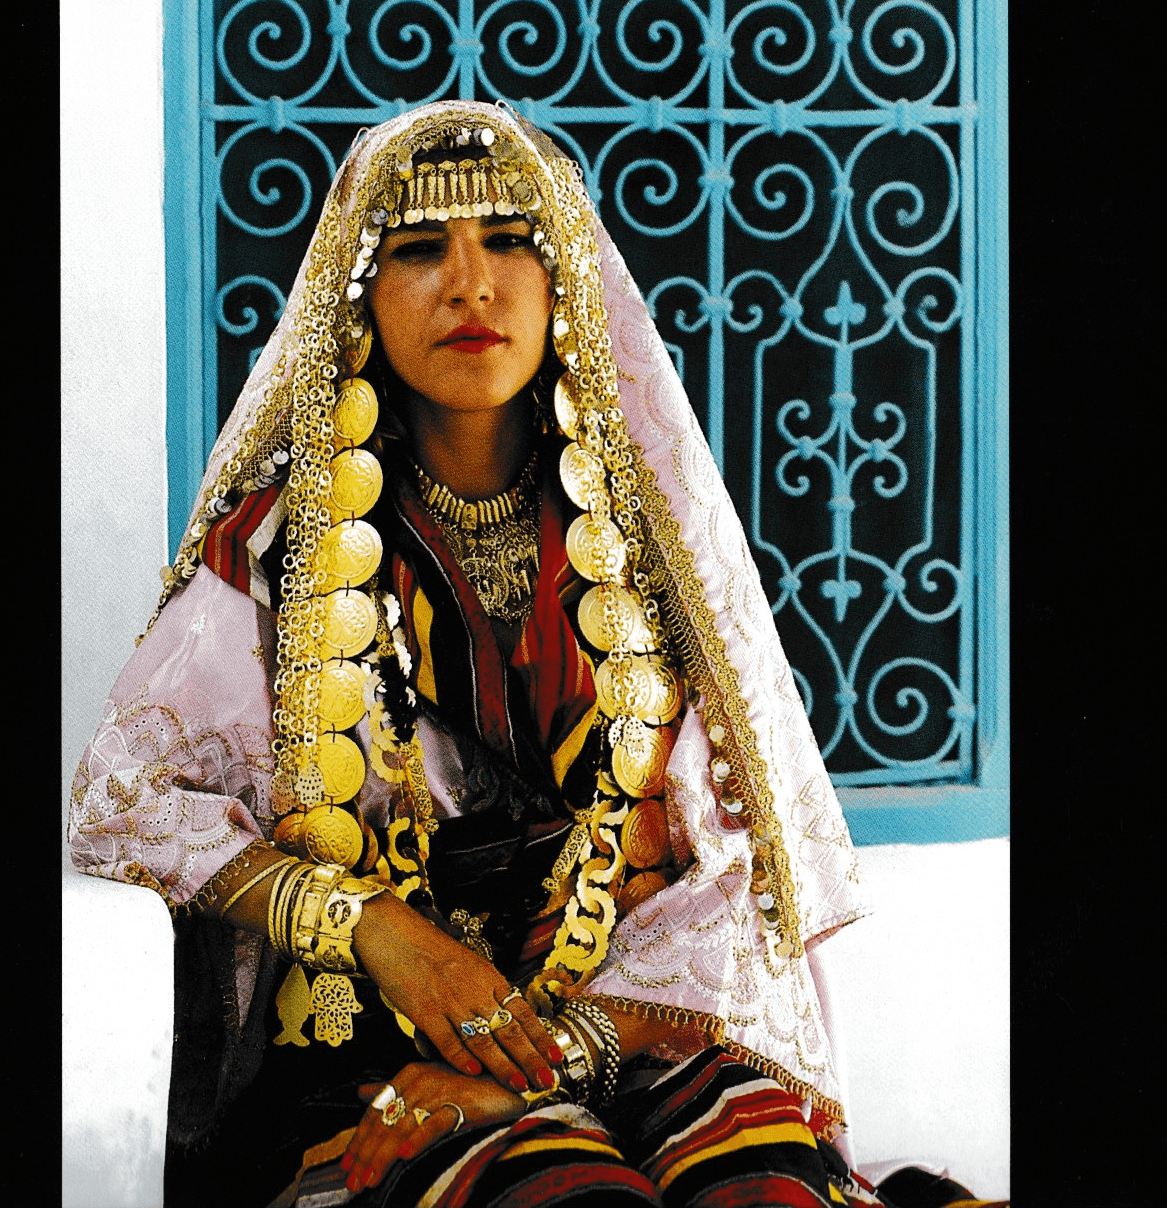 Les Bijoux De Tunisie de Samira Gargouri-Séthom